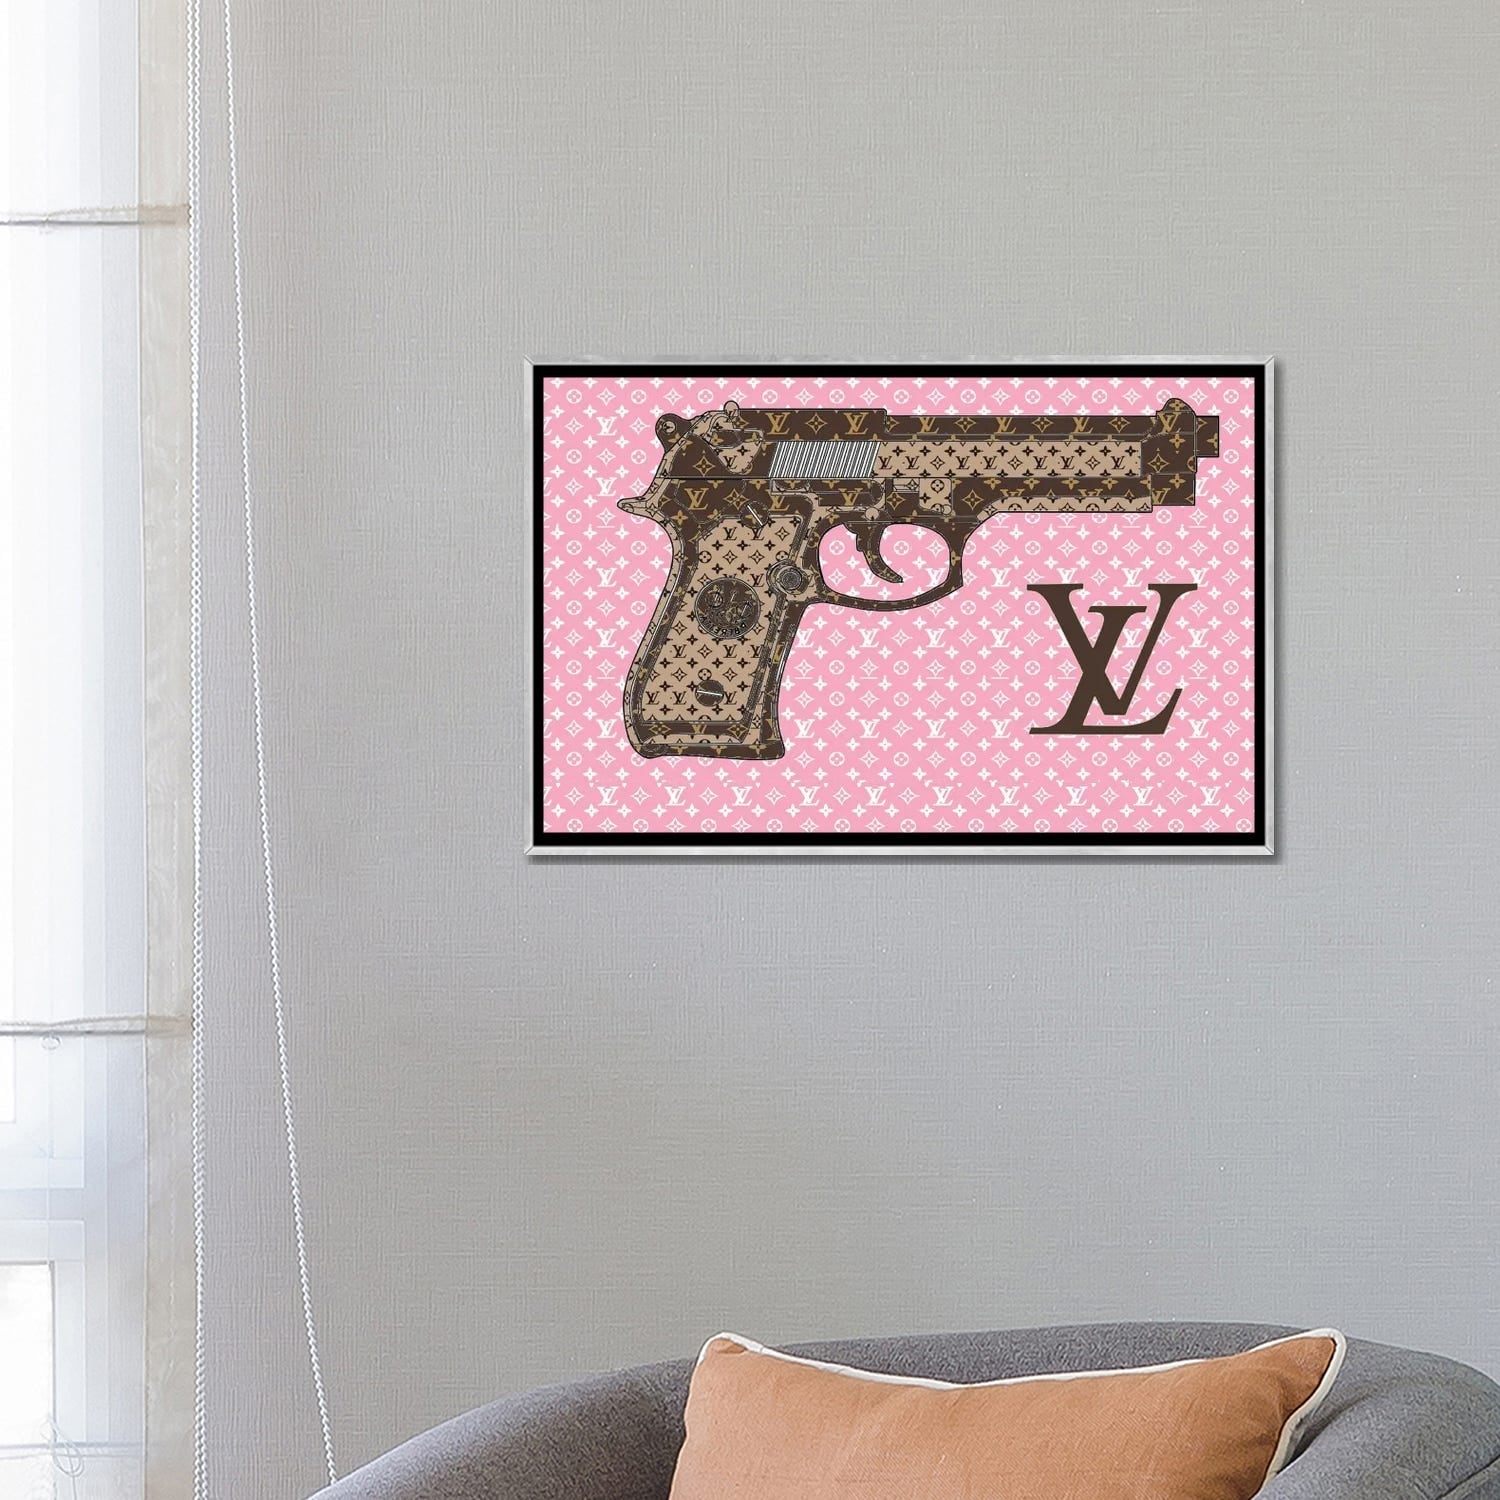 Julie Schreiber Canvas Wall Decor Prints - Louis Vuitton Revolver ( Fashion > Fashion Brands > Louis Vuitton art) - 26x40 in